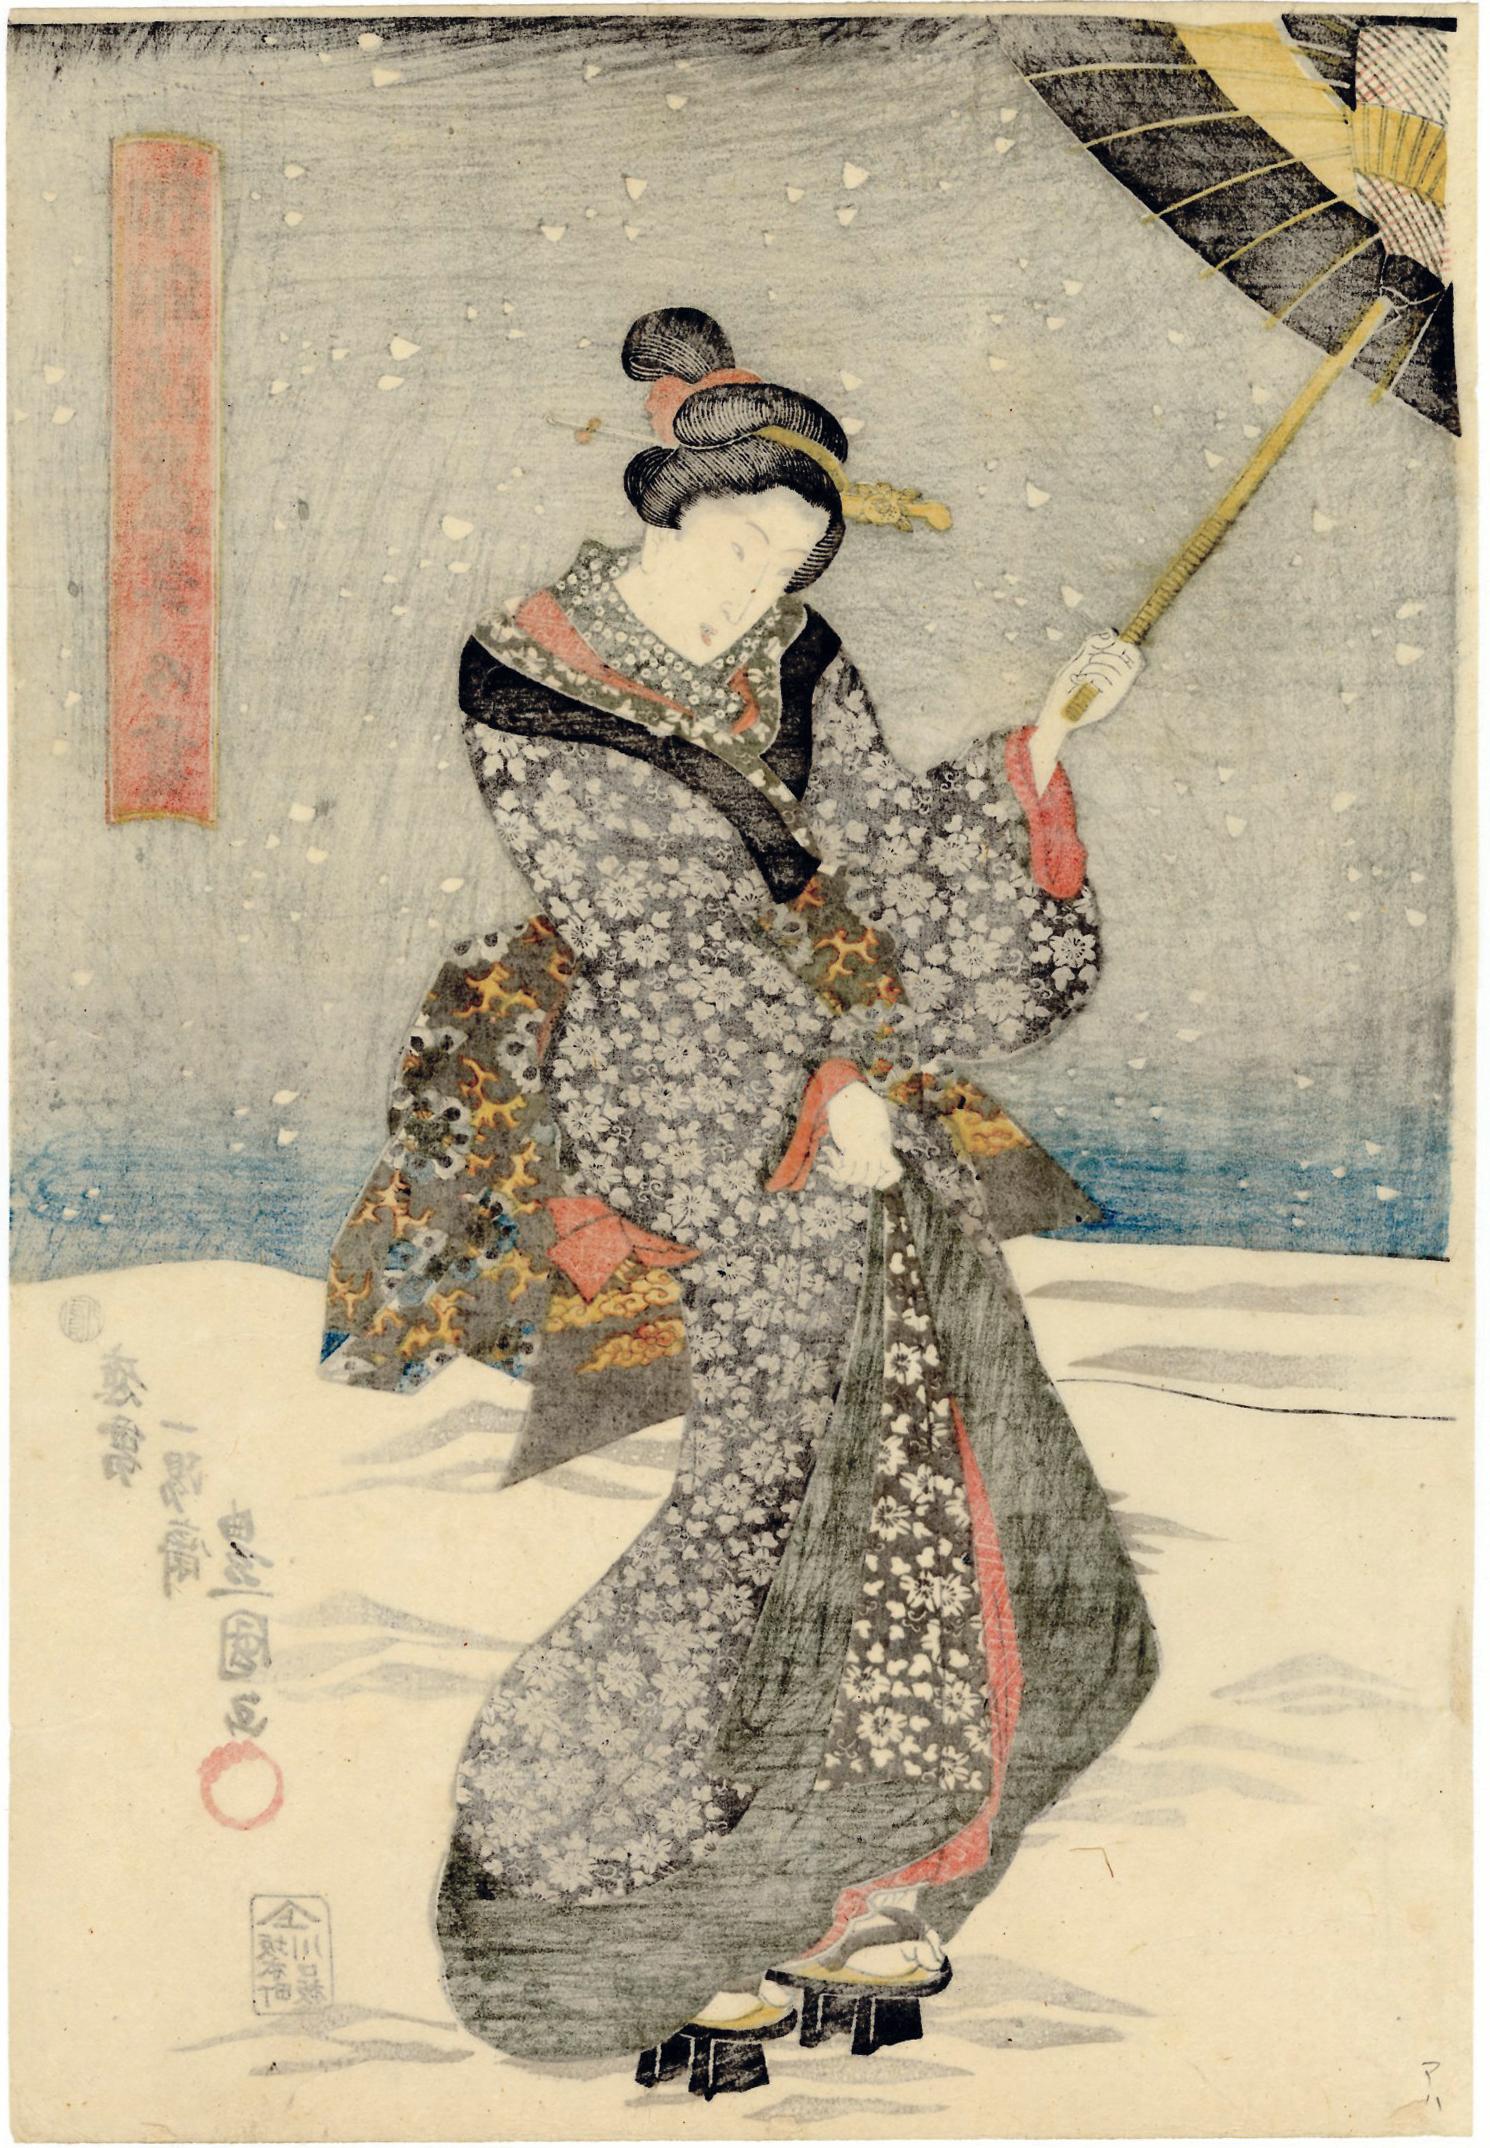 Japanese Beauties With Umbrellas in the Snow Visit the Shinto Shrine - Brown Figurative Print by Utagawa Kunisada (Toyokuni III)